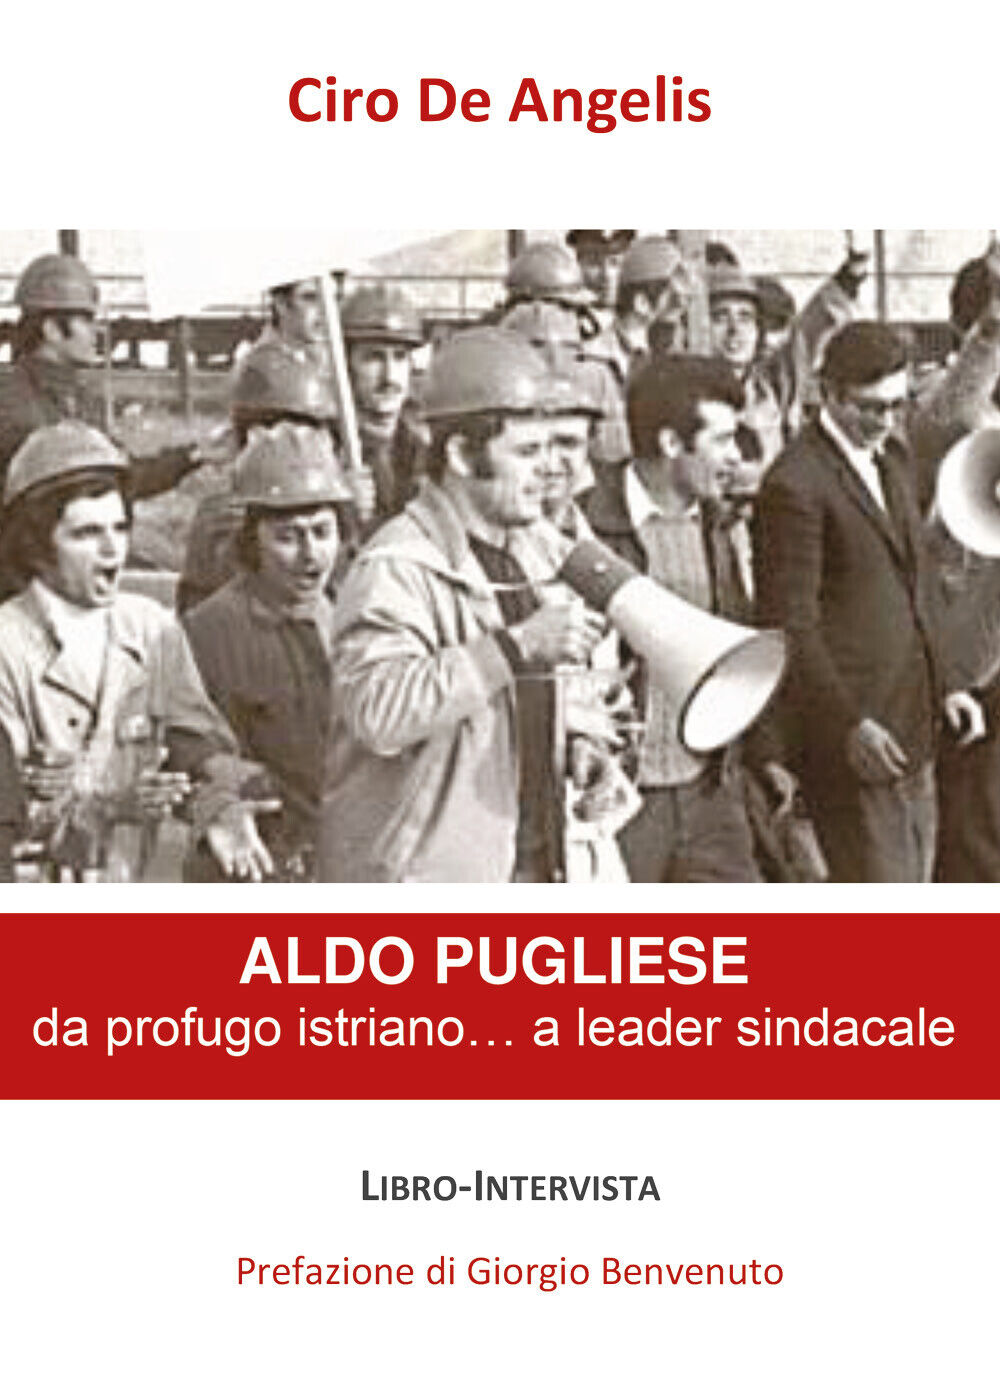 Aldo Pugliese, da profugo istriano... a leader sindacale di Ciro De Angelis, 202